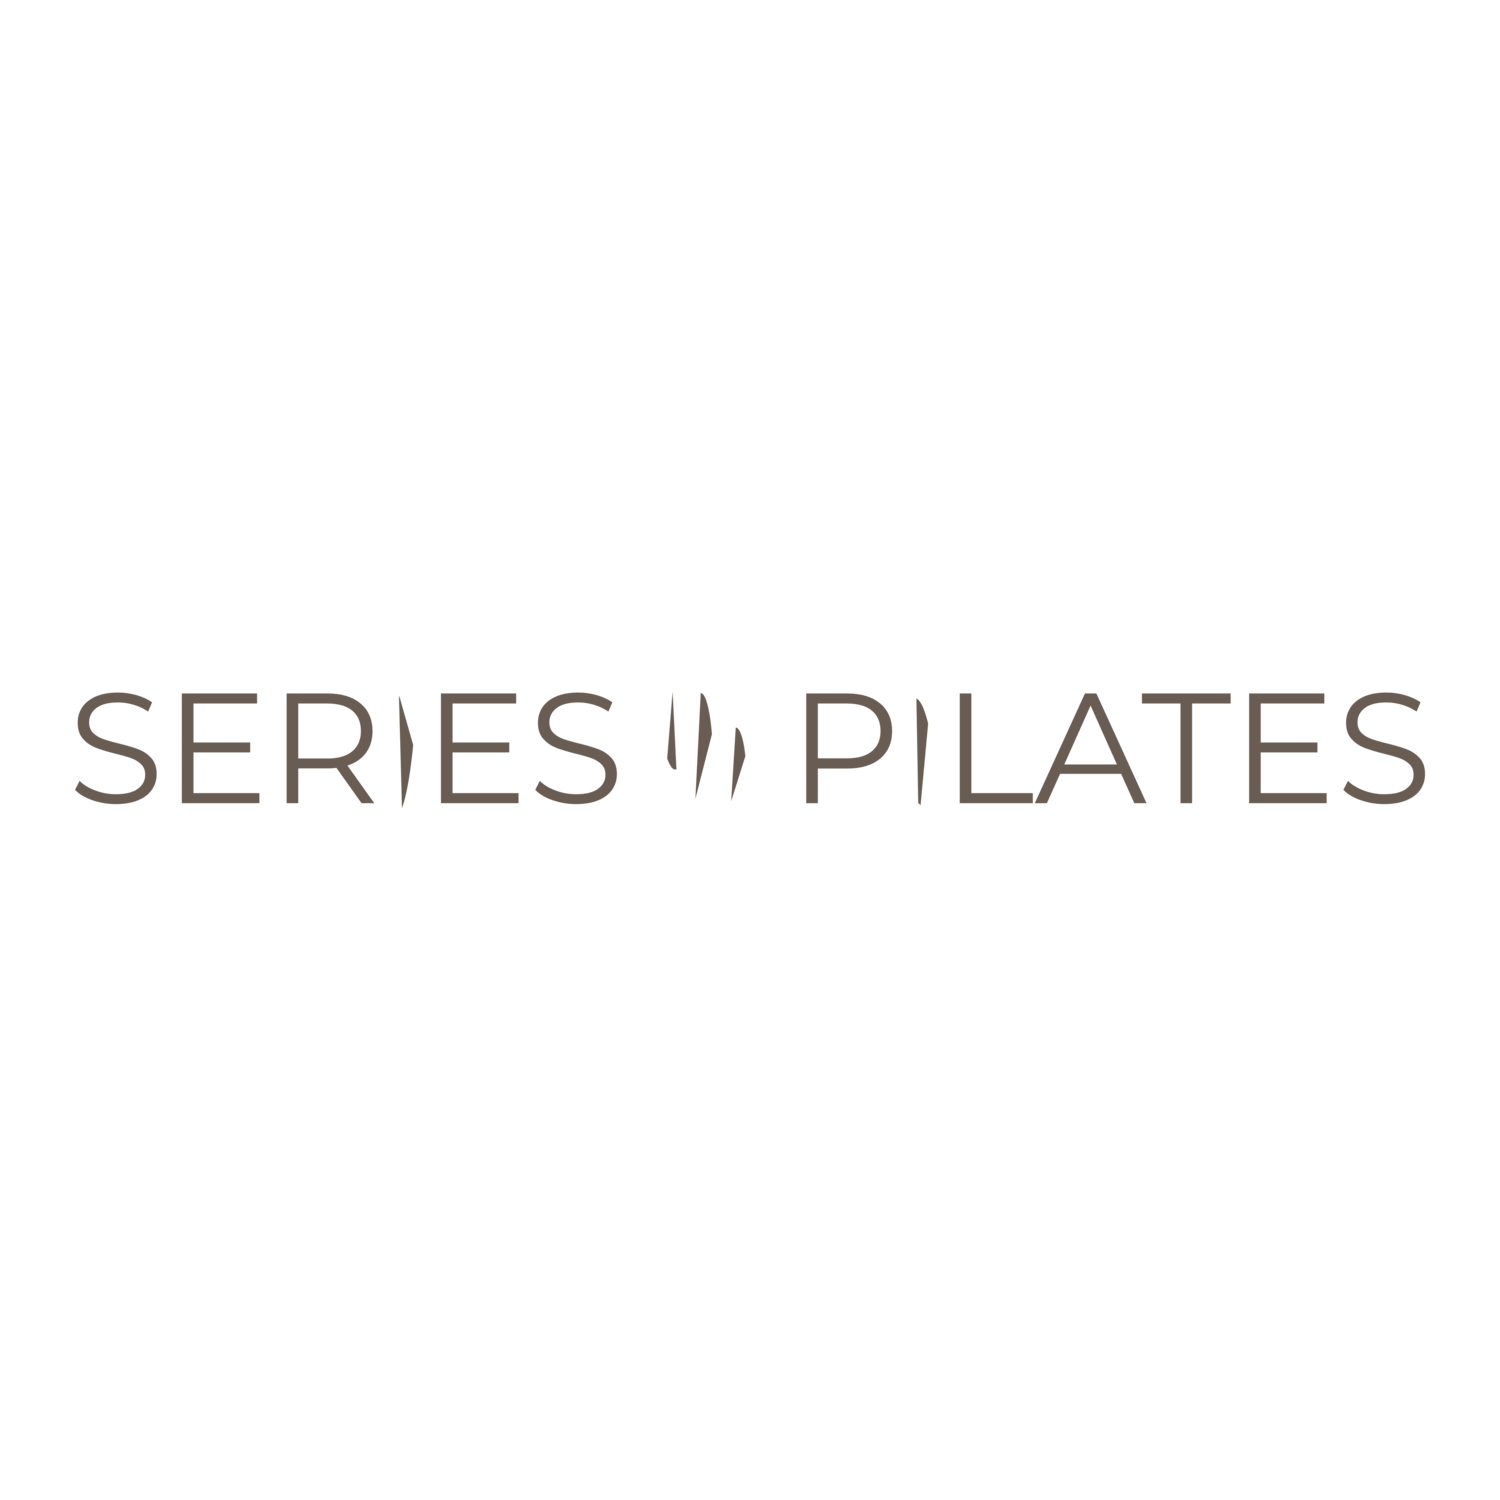 Series Pilates